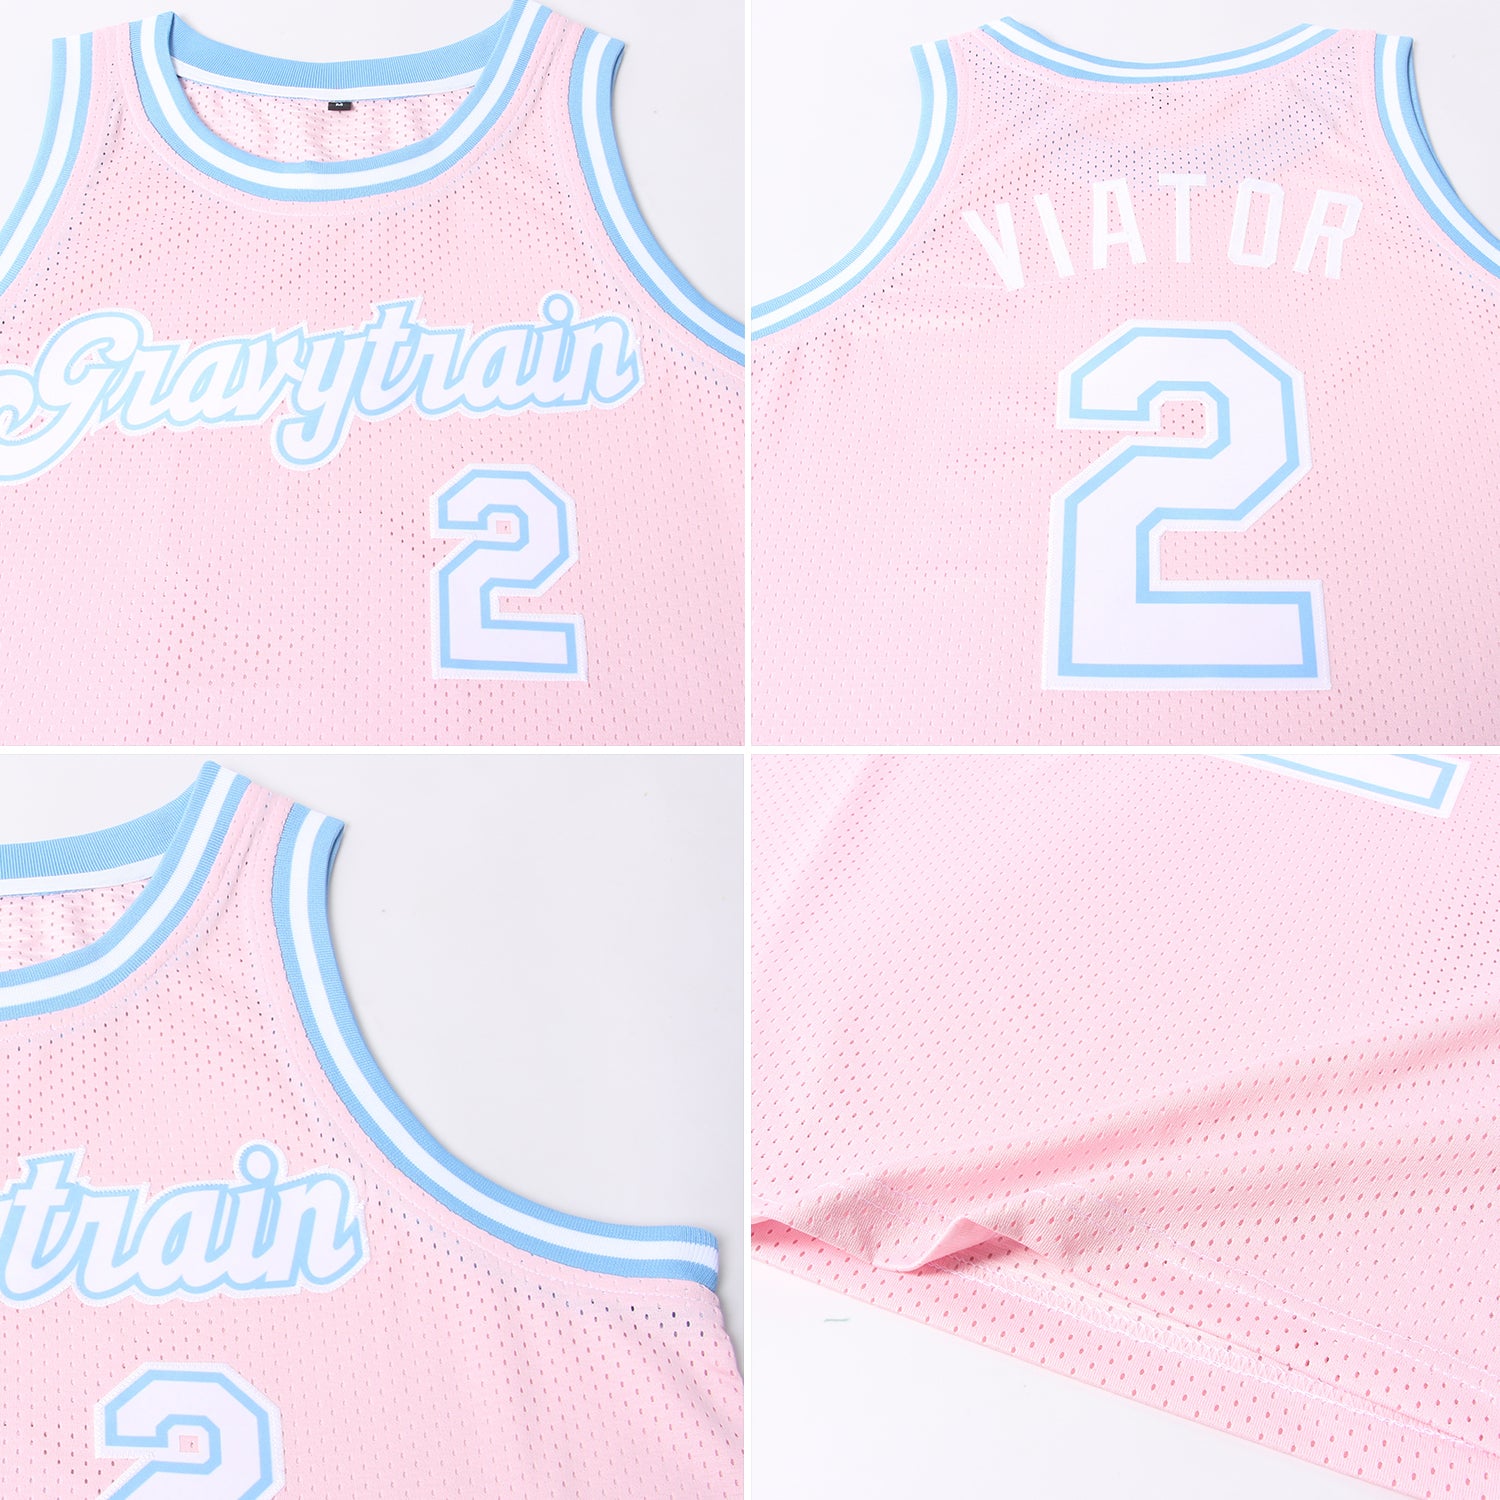 FANSIDEA Custom Basketball Jersey White Pink Black-Light Blue Authentic Throwback Men's Size:XL